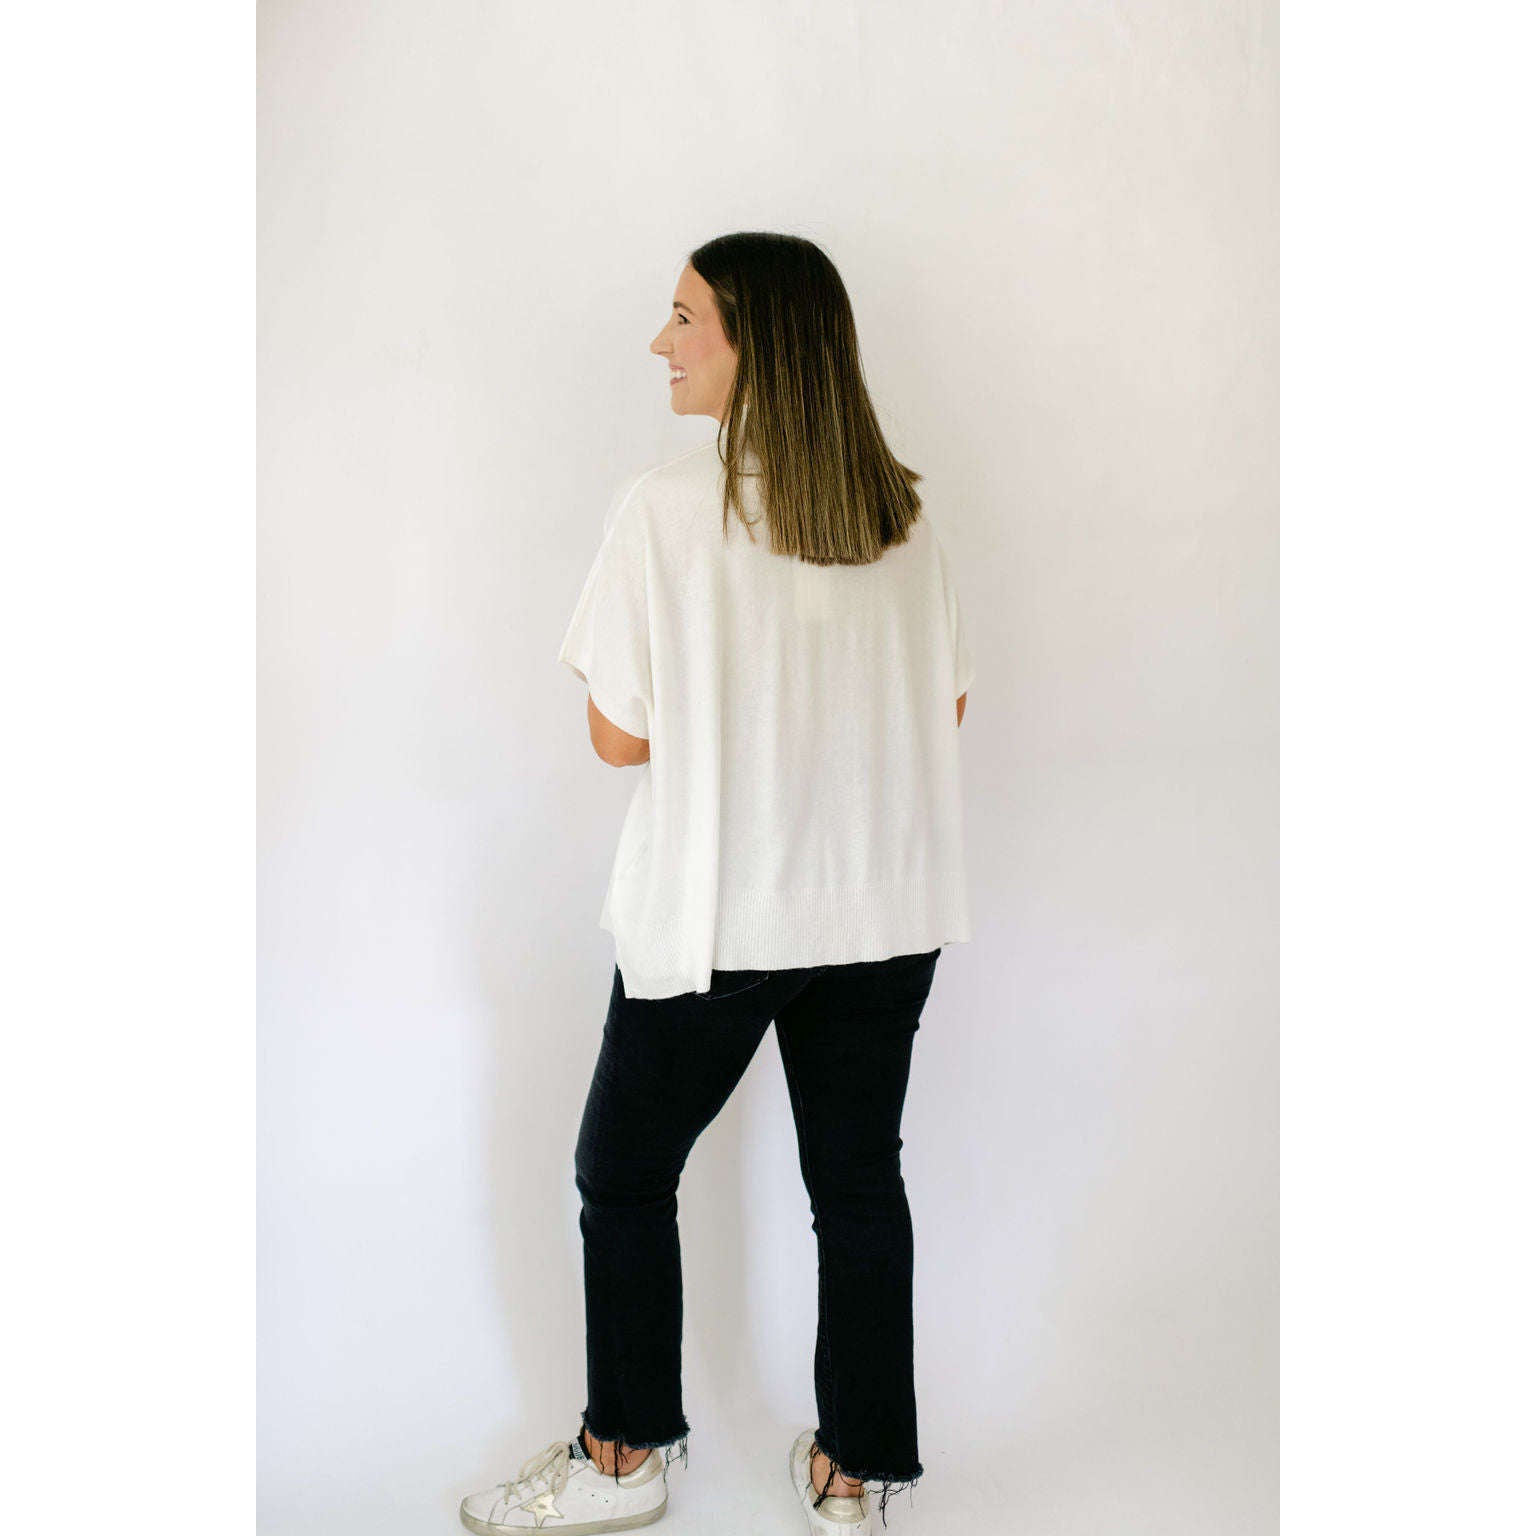 8.28 Boutique:Kerisma Knits,Kerisma Caroline Sweater in White,Sweaters